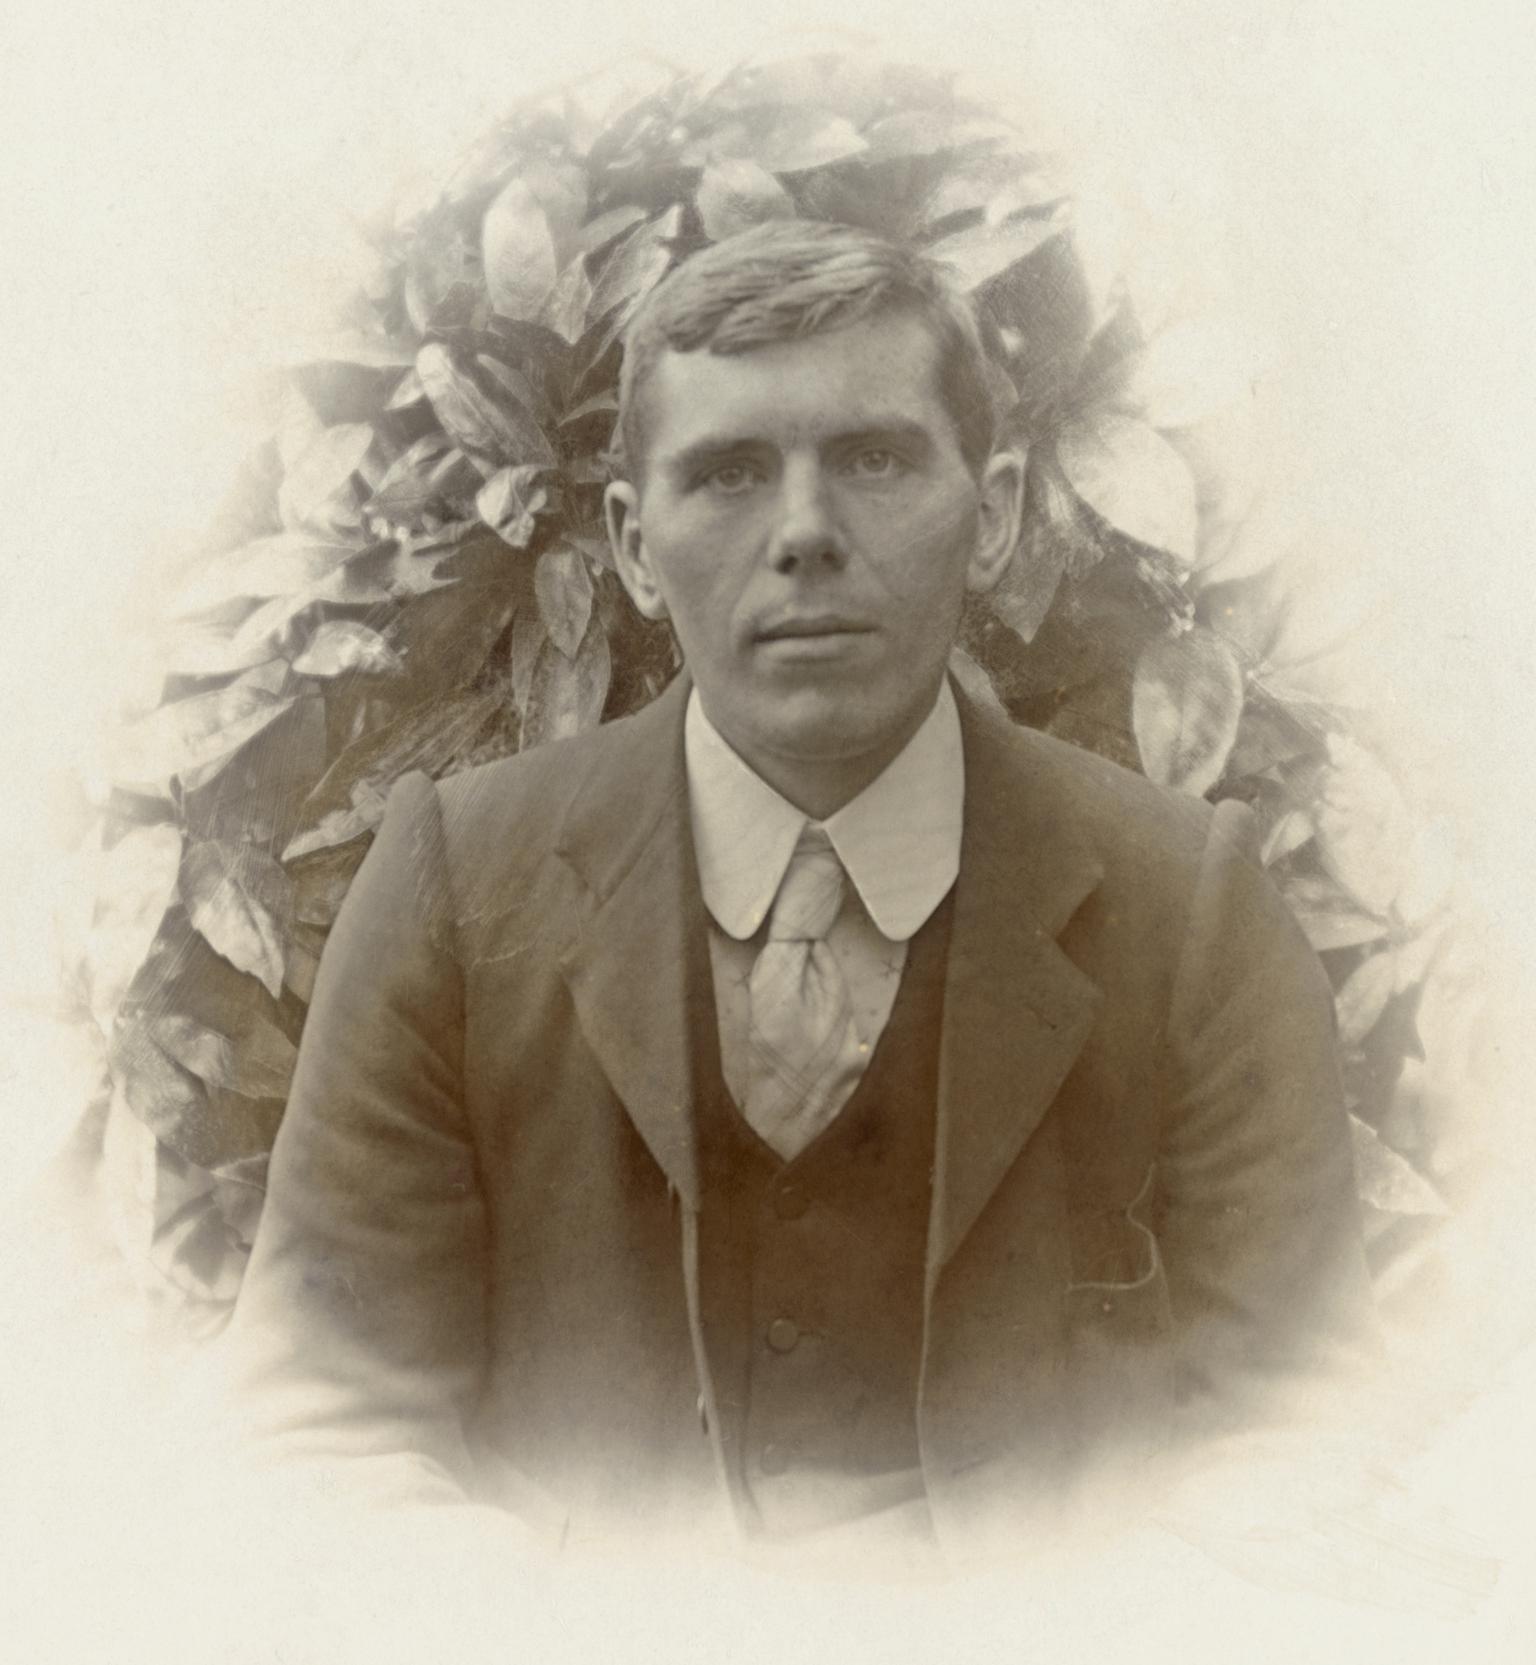 T. Jones (Esyllwg) (photograph)